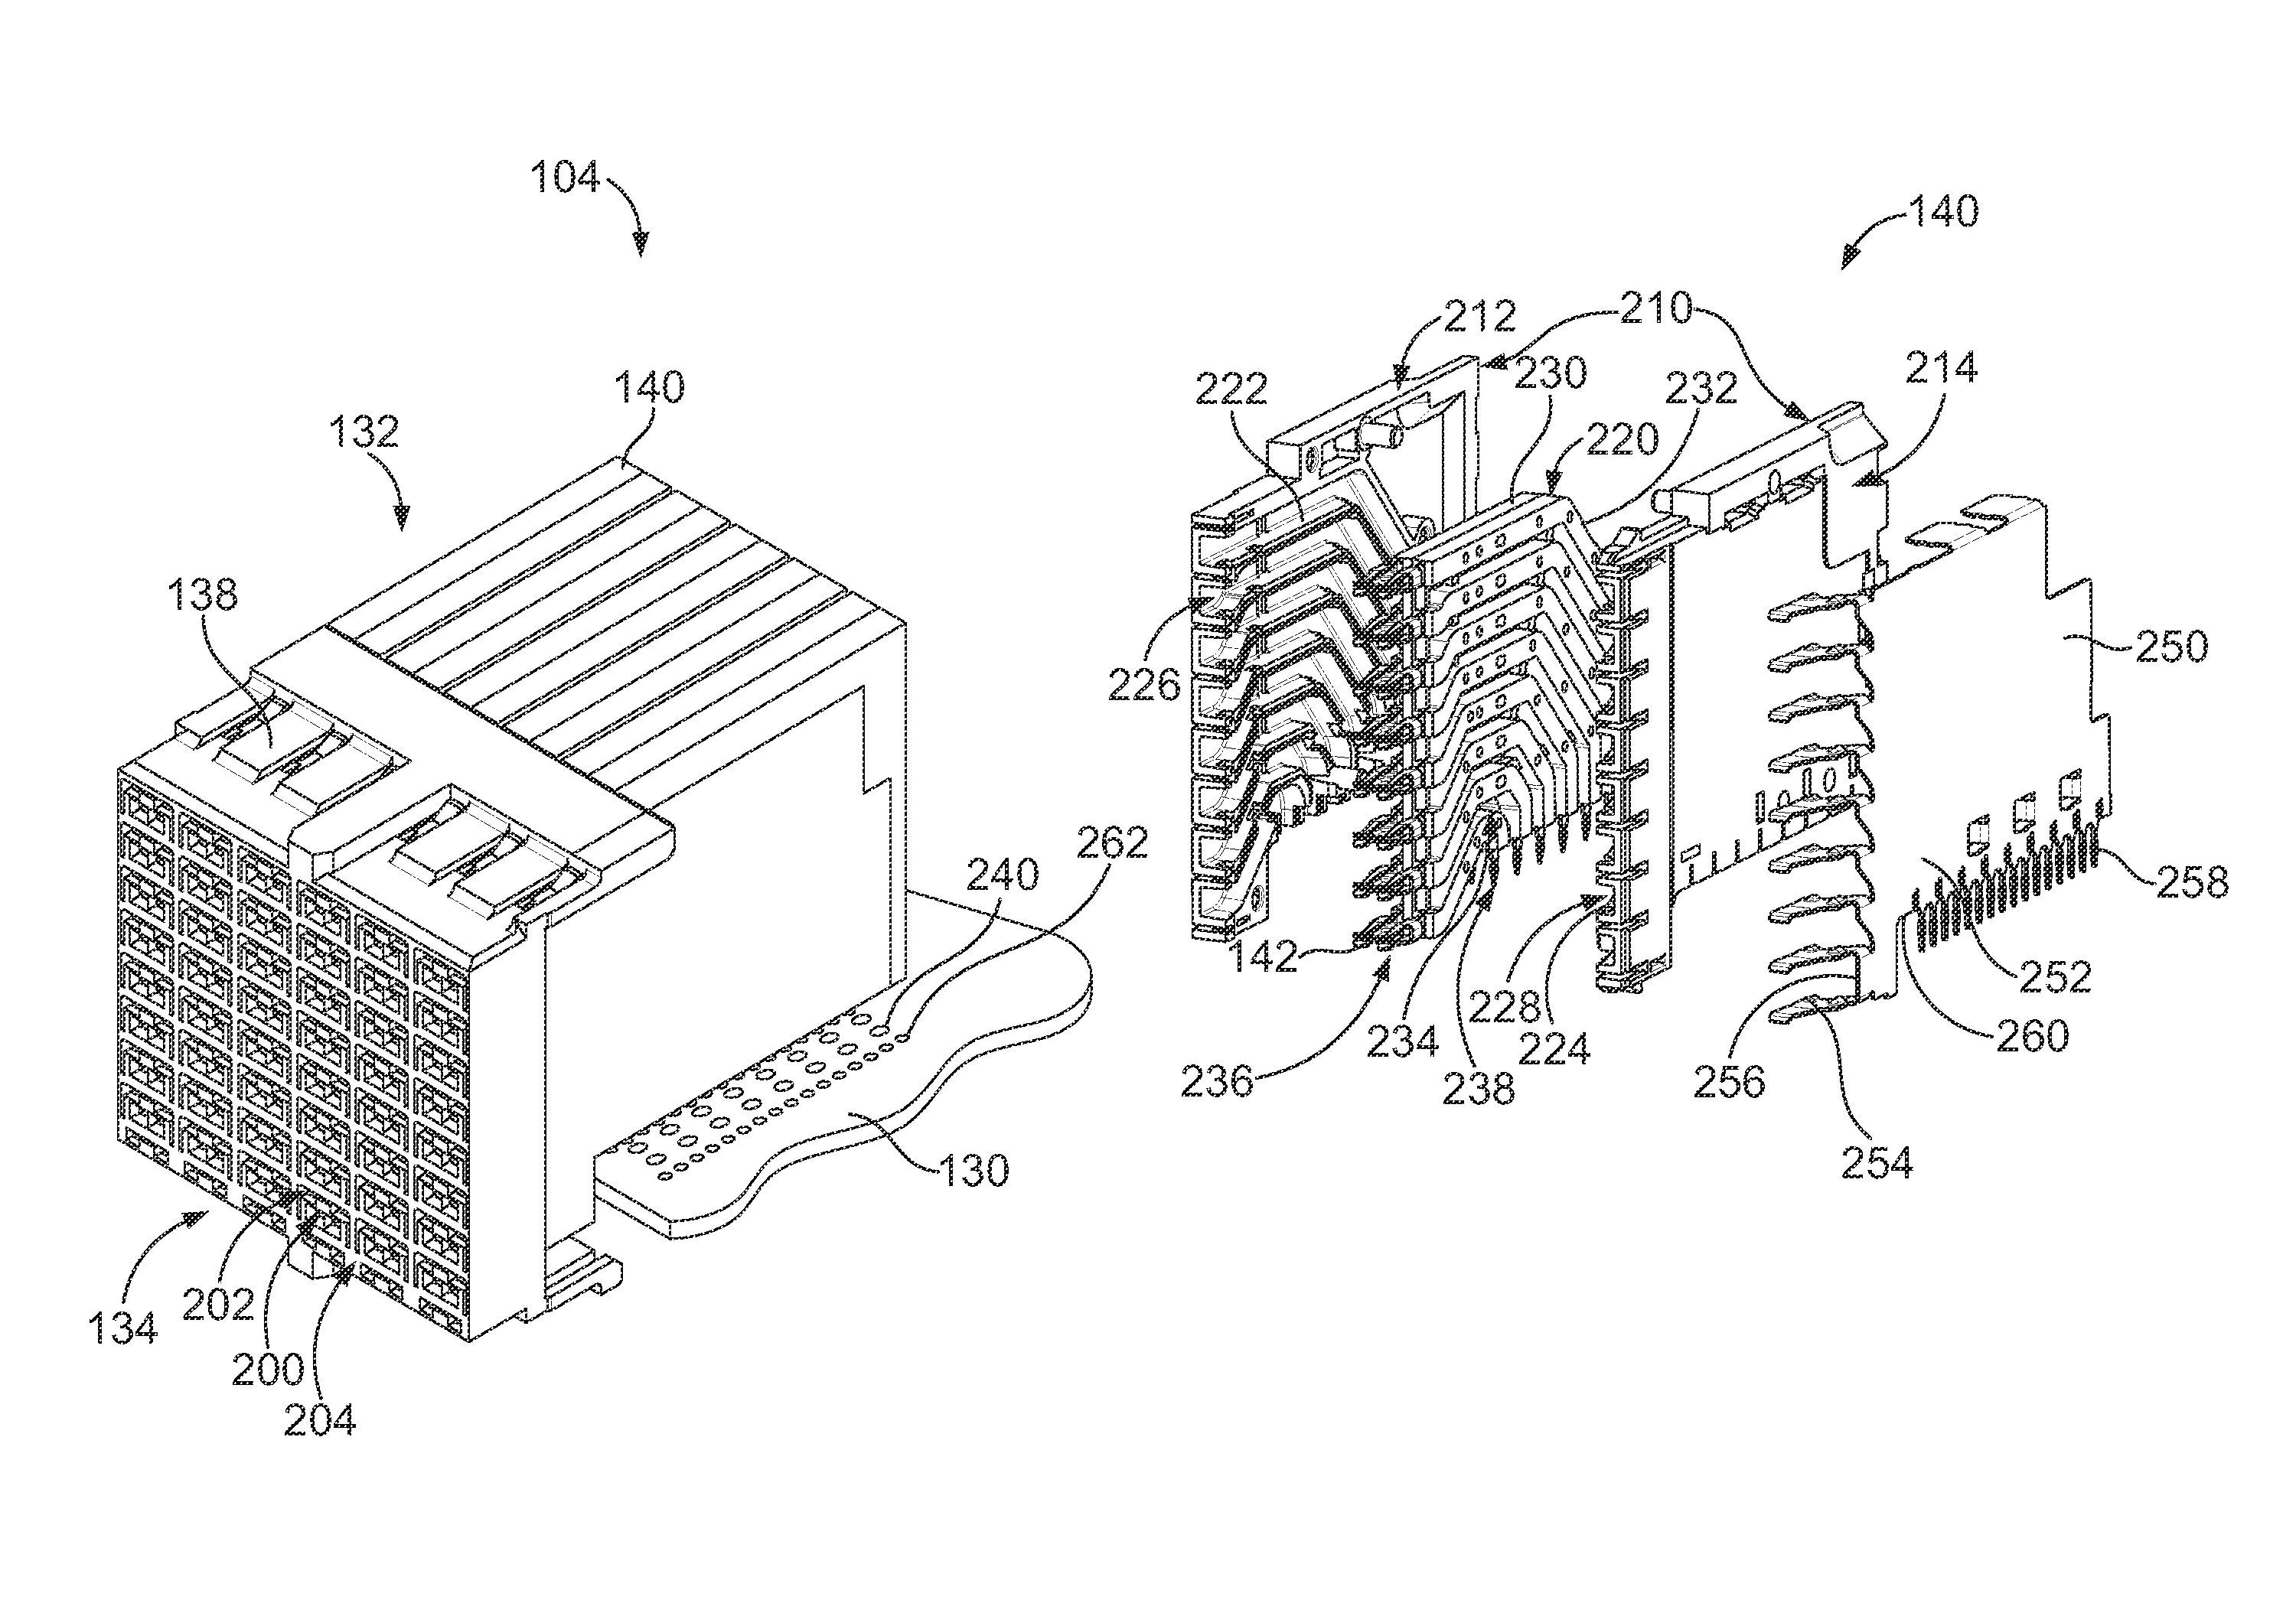 Midplane orthogonal connector system